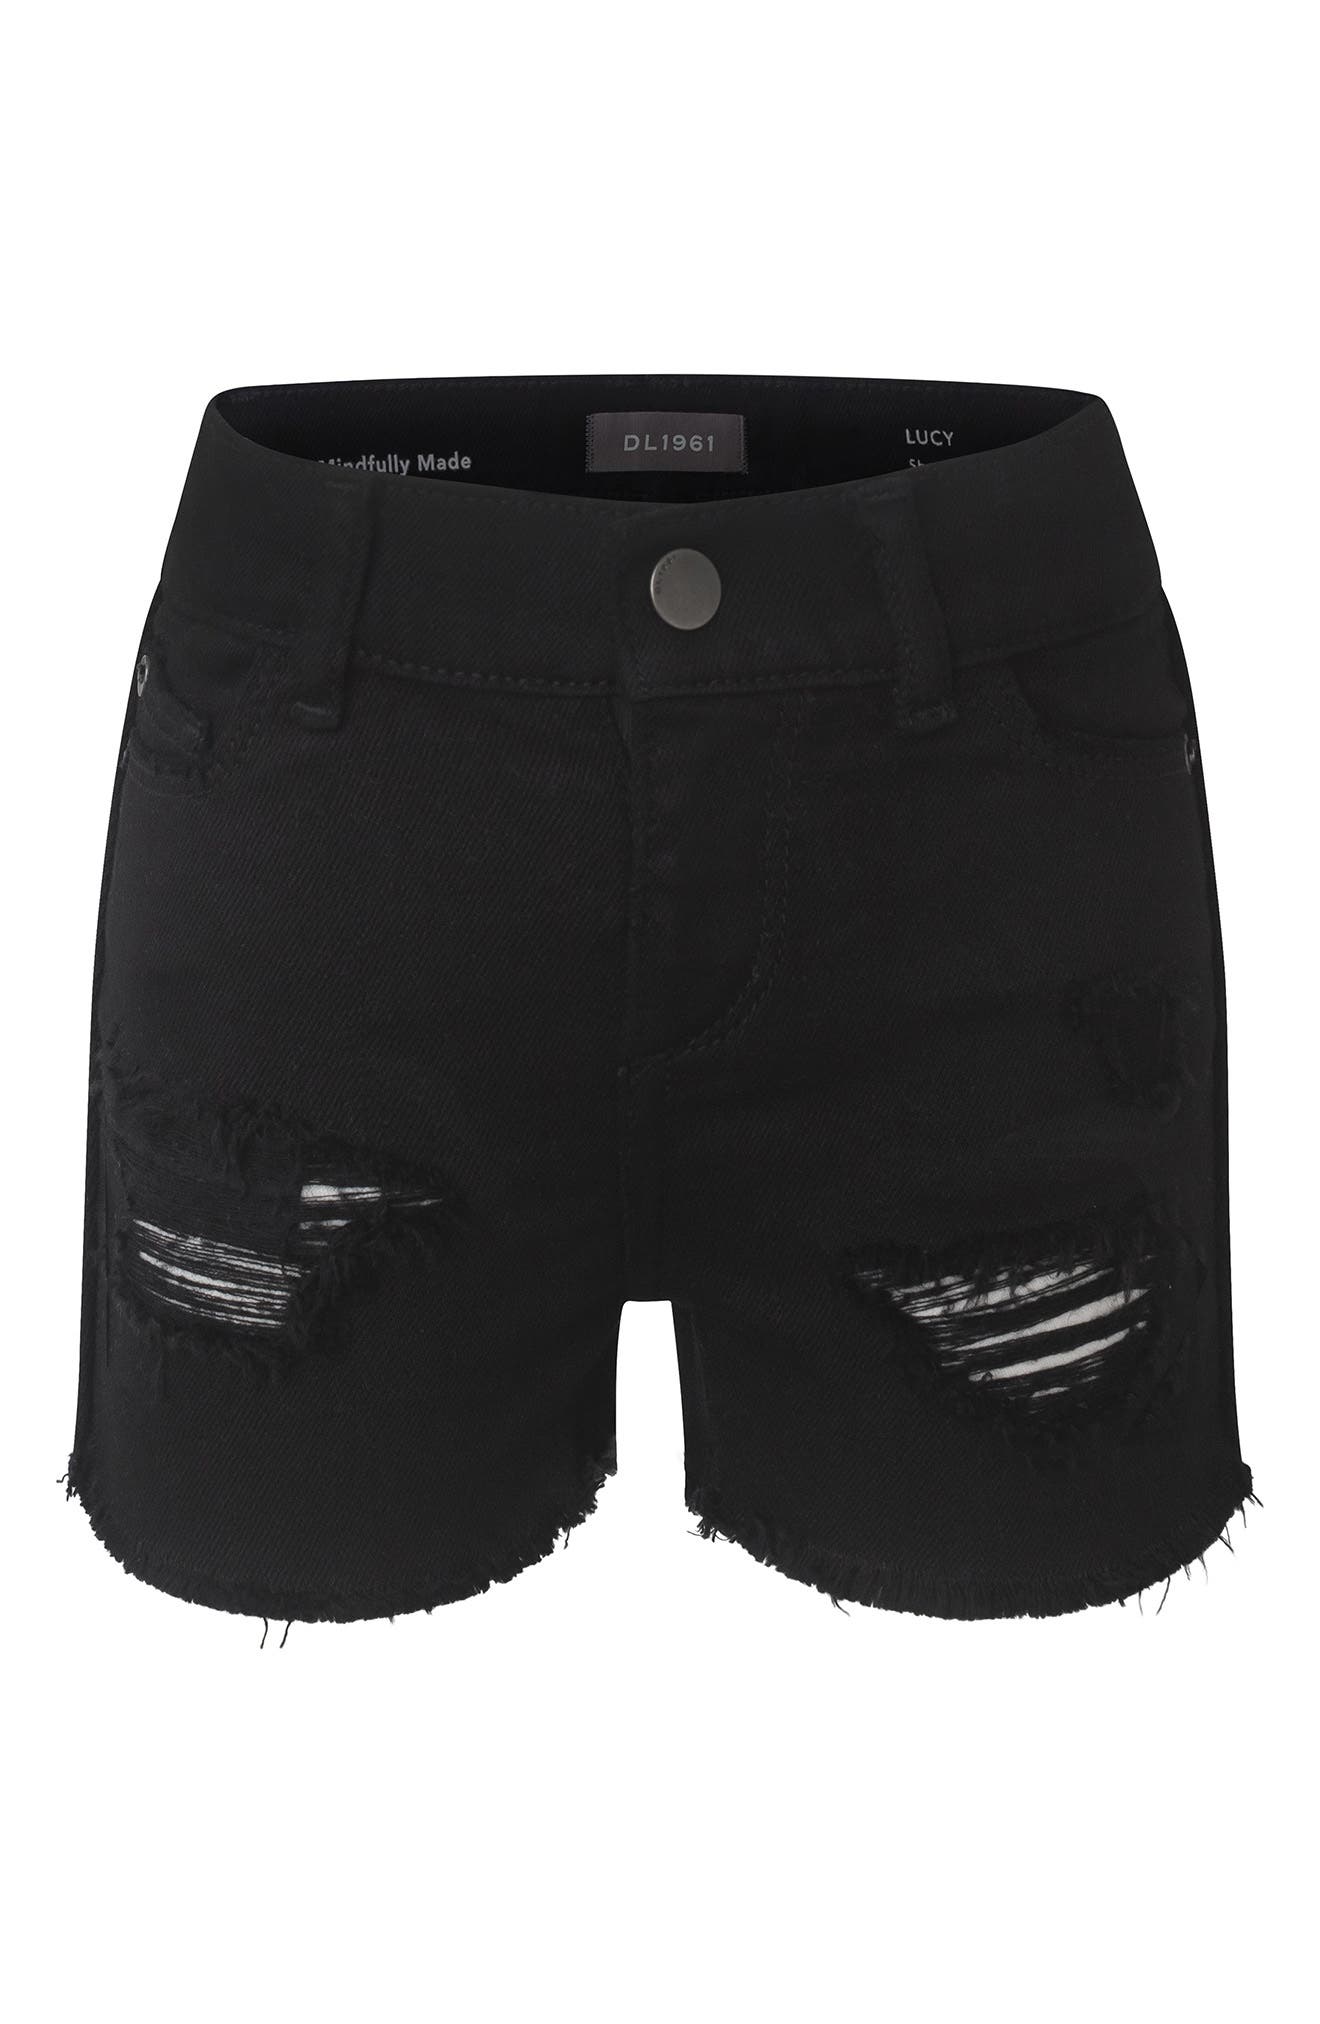 girls black denim shorts